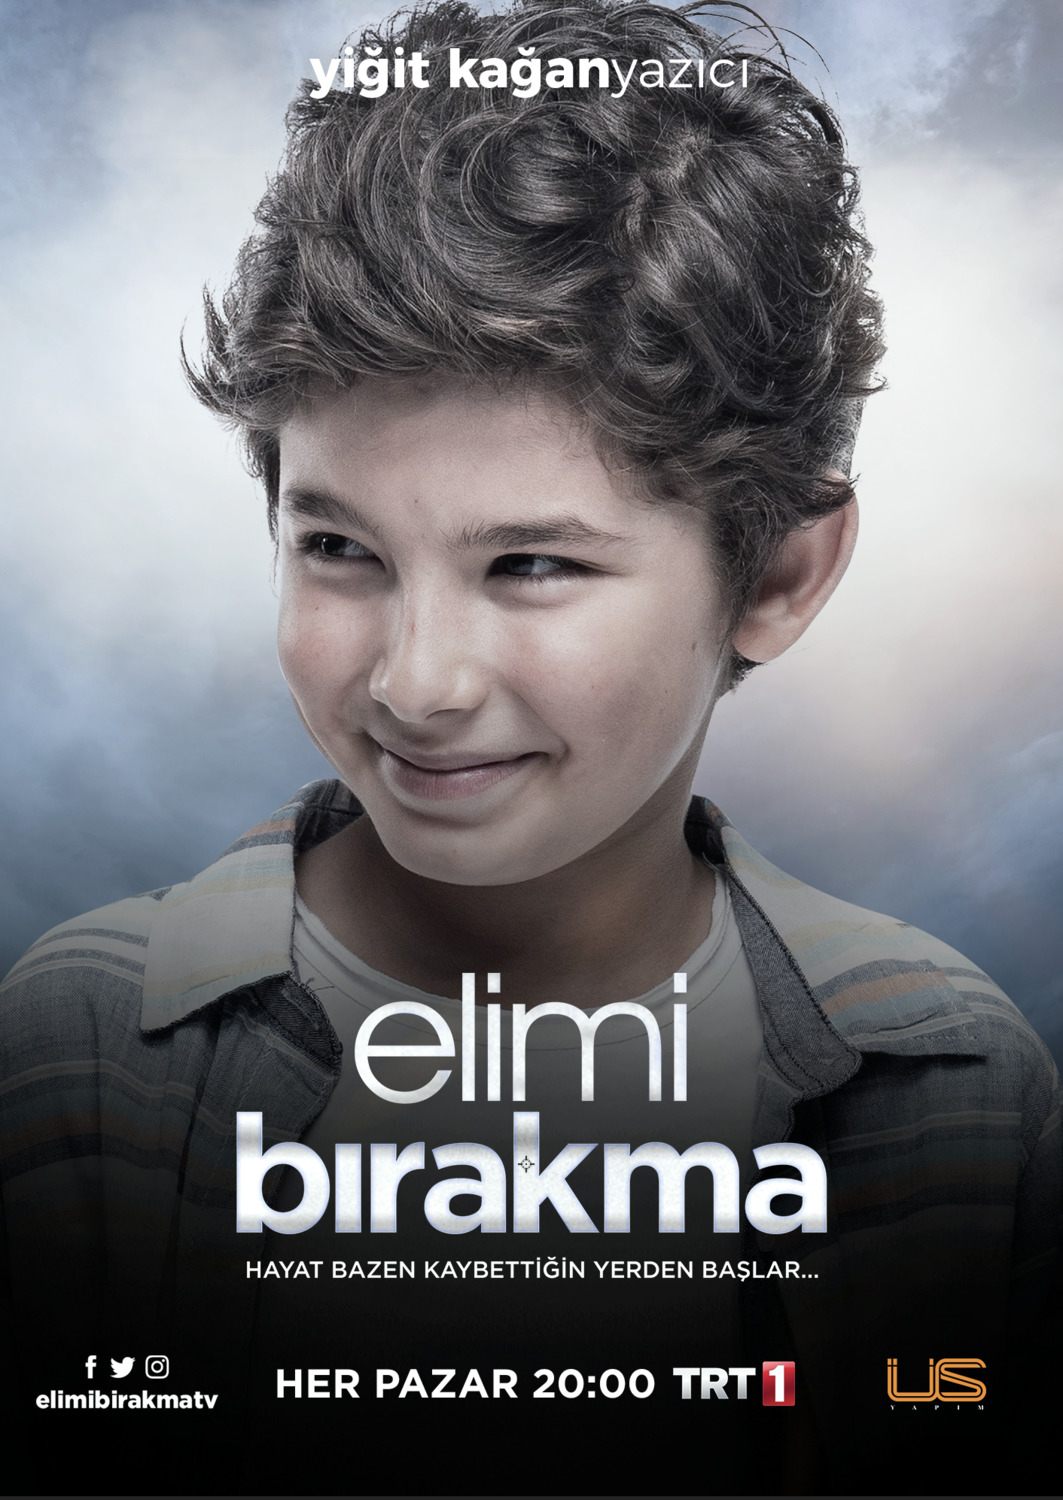 Extra Large TV Poster Image for Elimi birakma (#9 of 20)